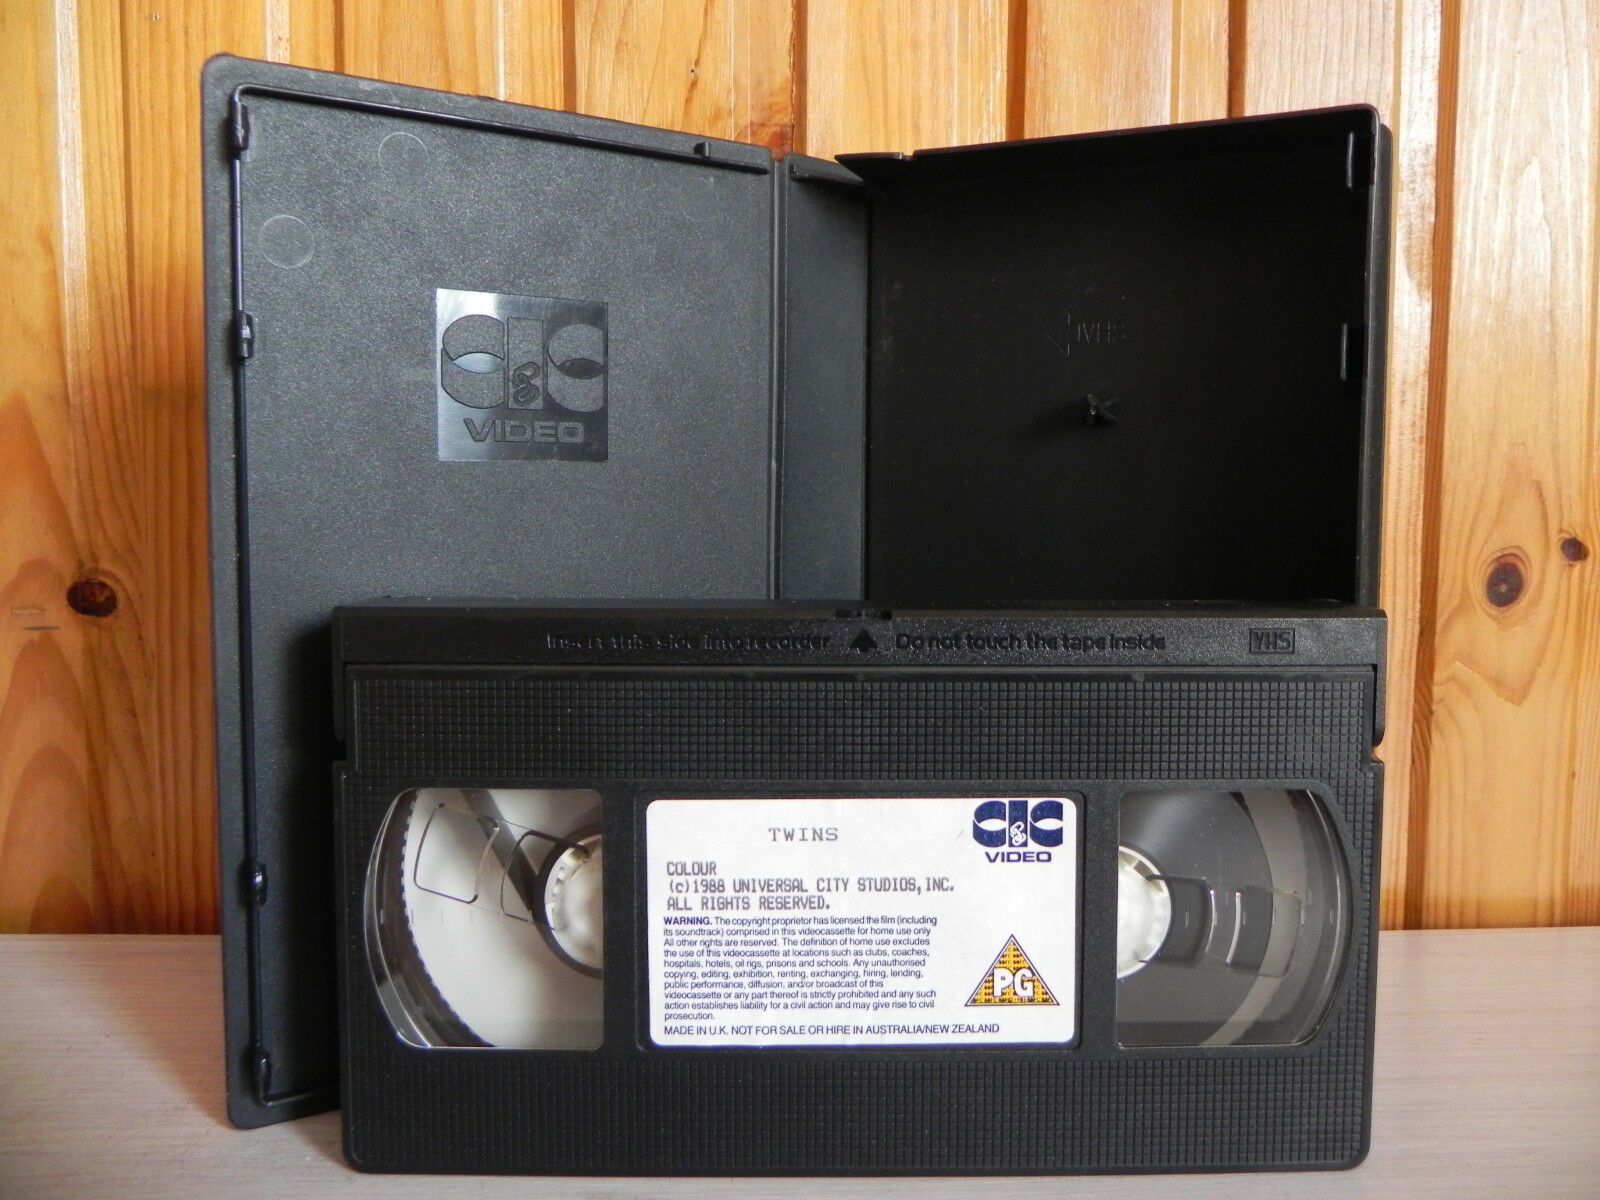 Twins - CIC Video - Comedy - Arnold Schwarzenegger - Danny DeVito - Pal VHS-